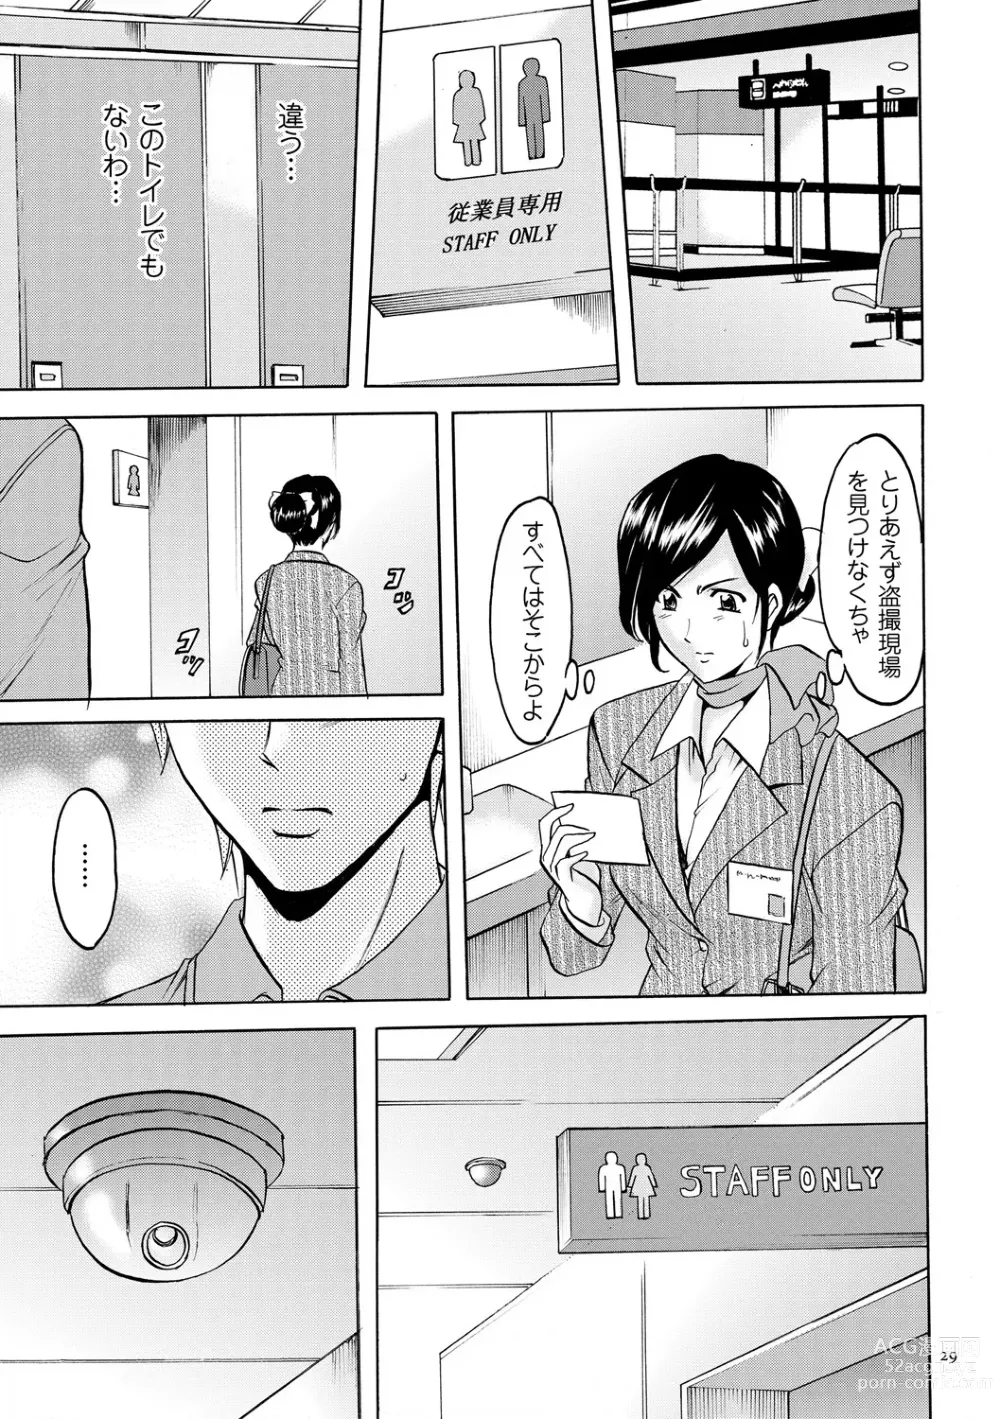 Page 29 of manga Sennyu Tsuma Satomi Kiroku